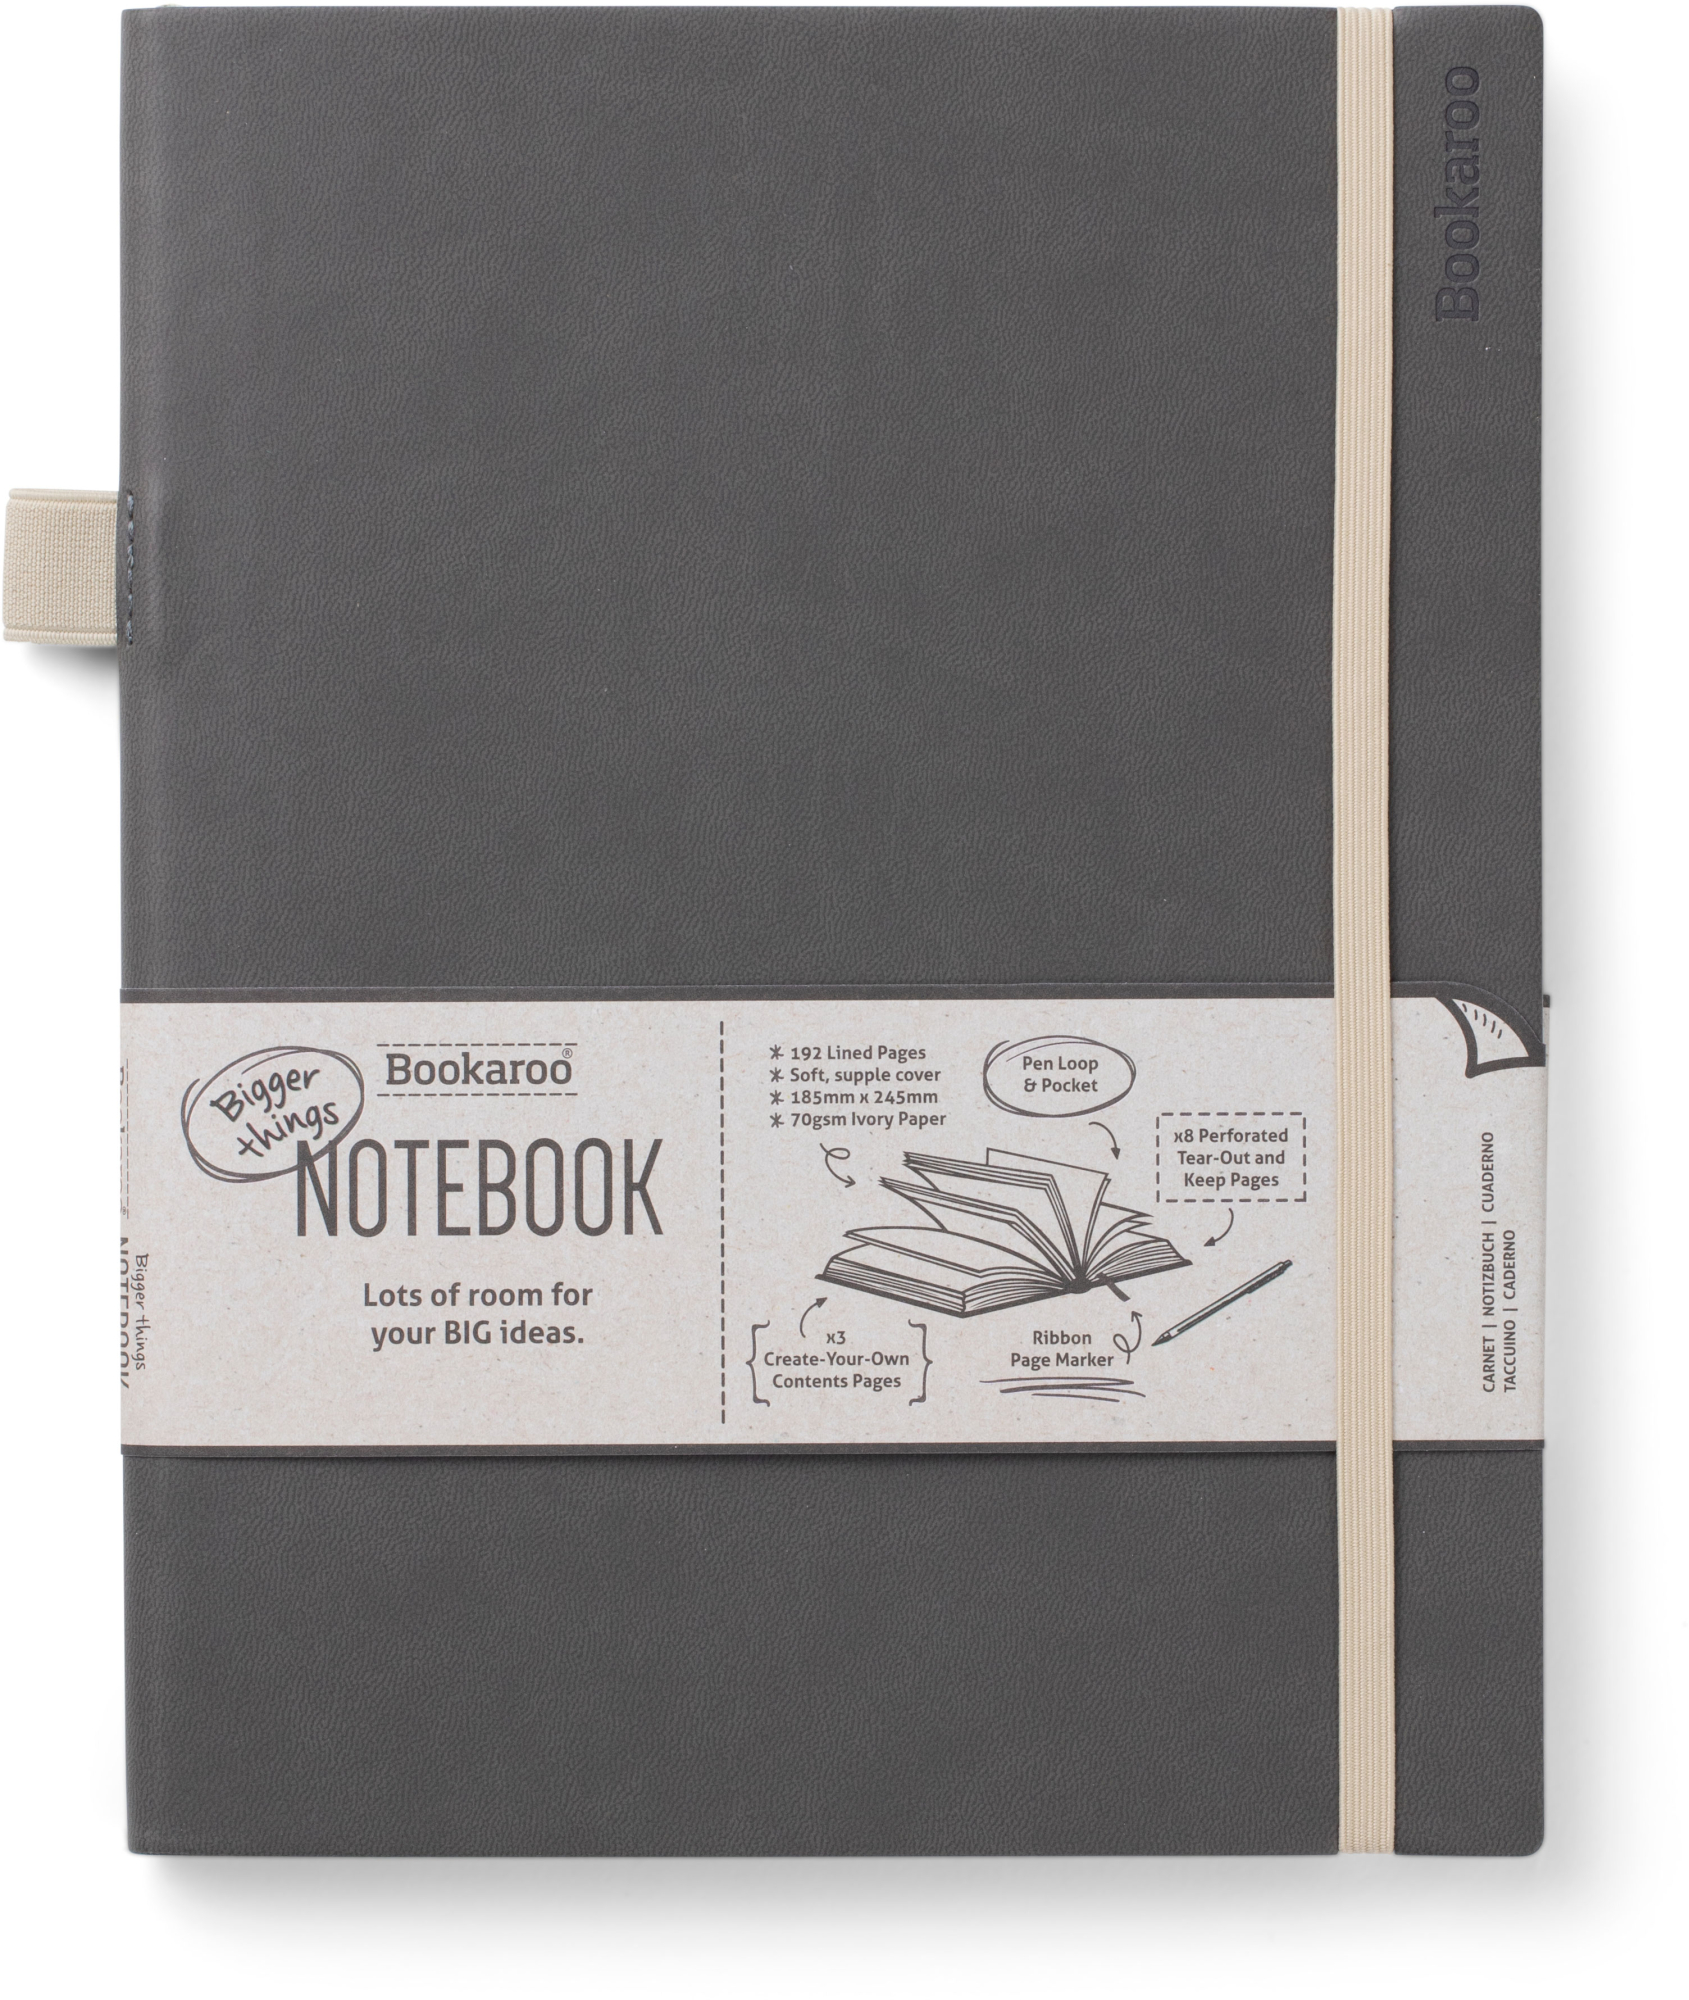 Bookaroo Bigger Things Notebook